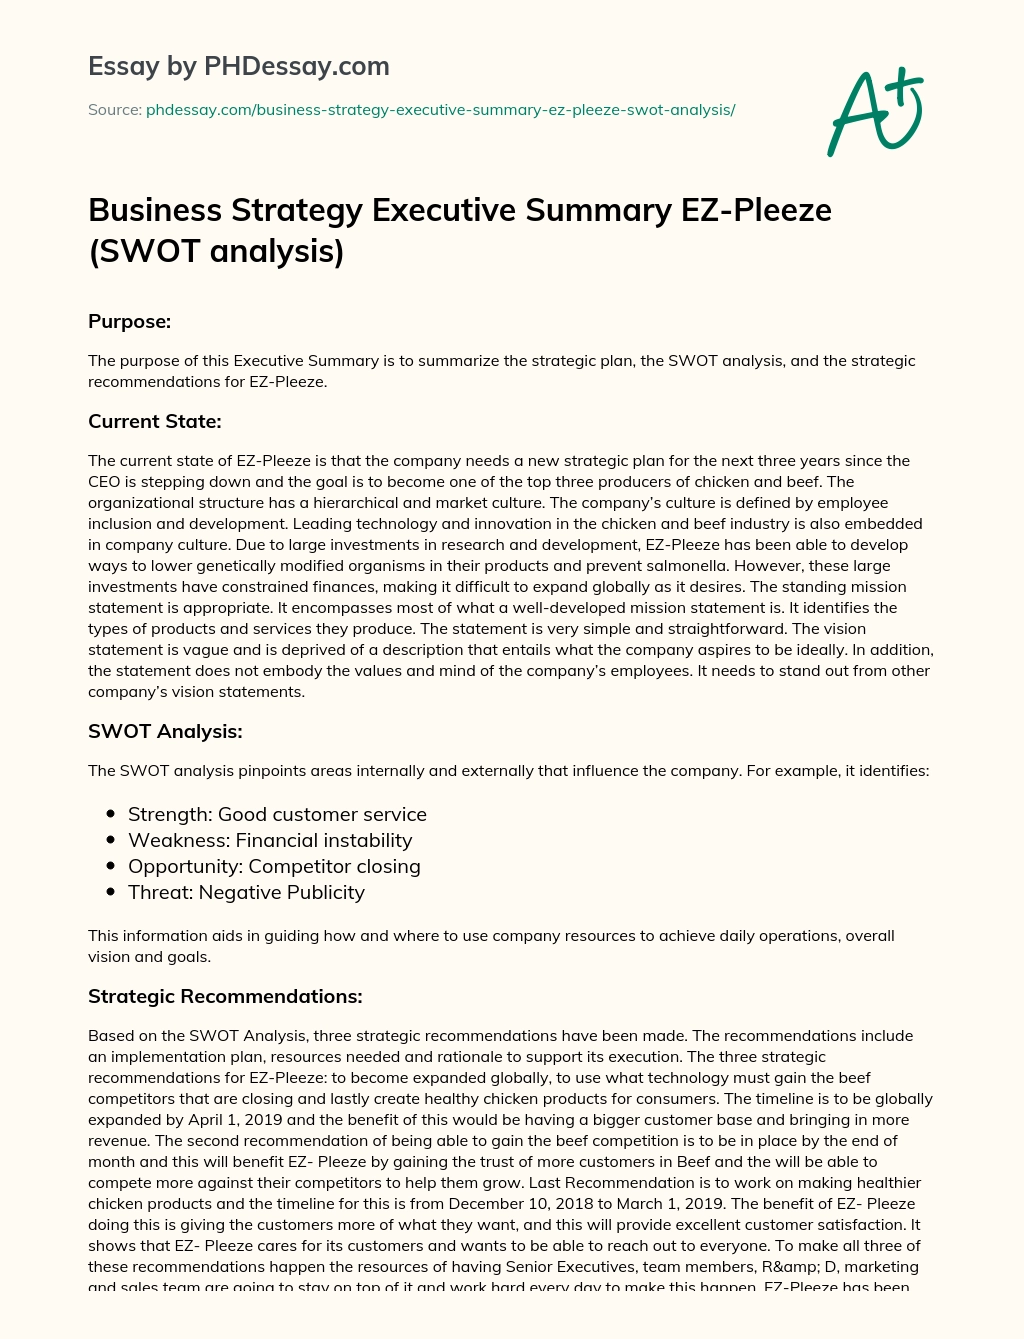 Business Strategy Executive Summary EZ-Pleeze (SWOT analysis) essay